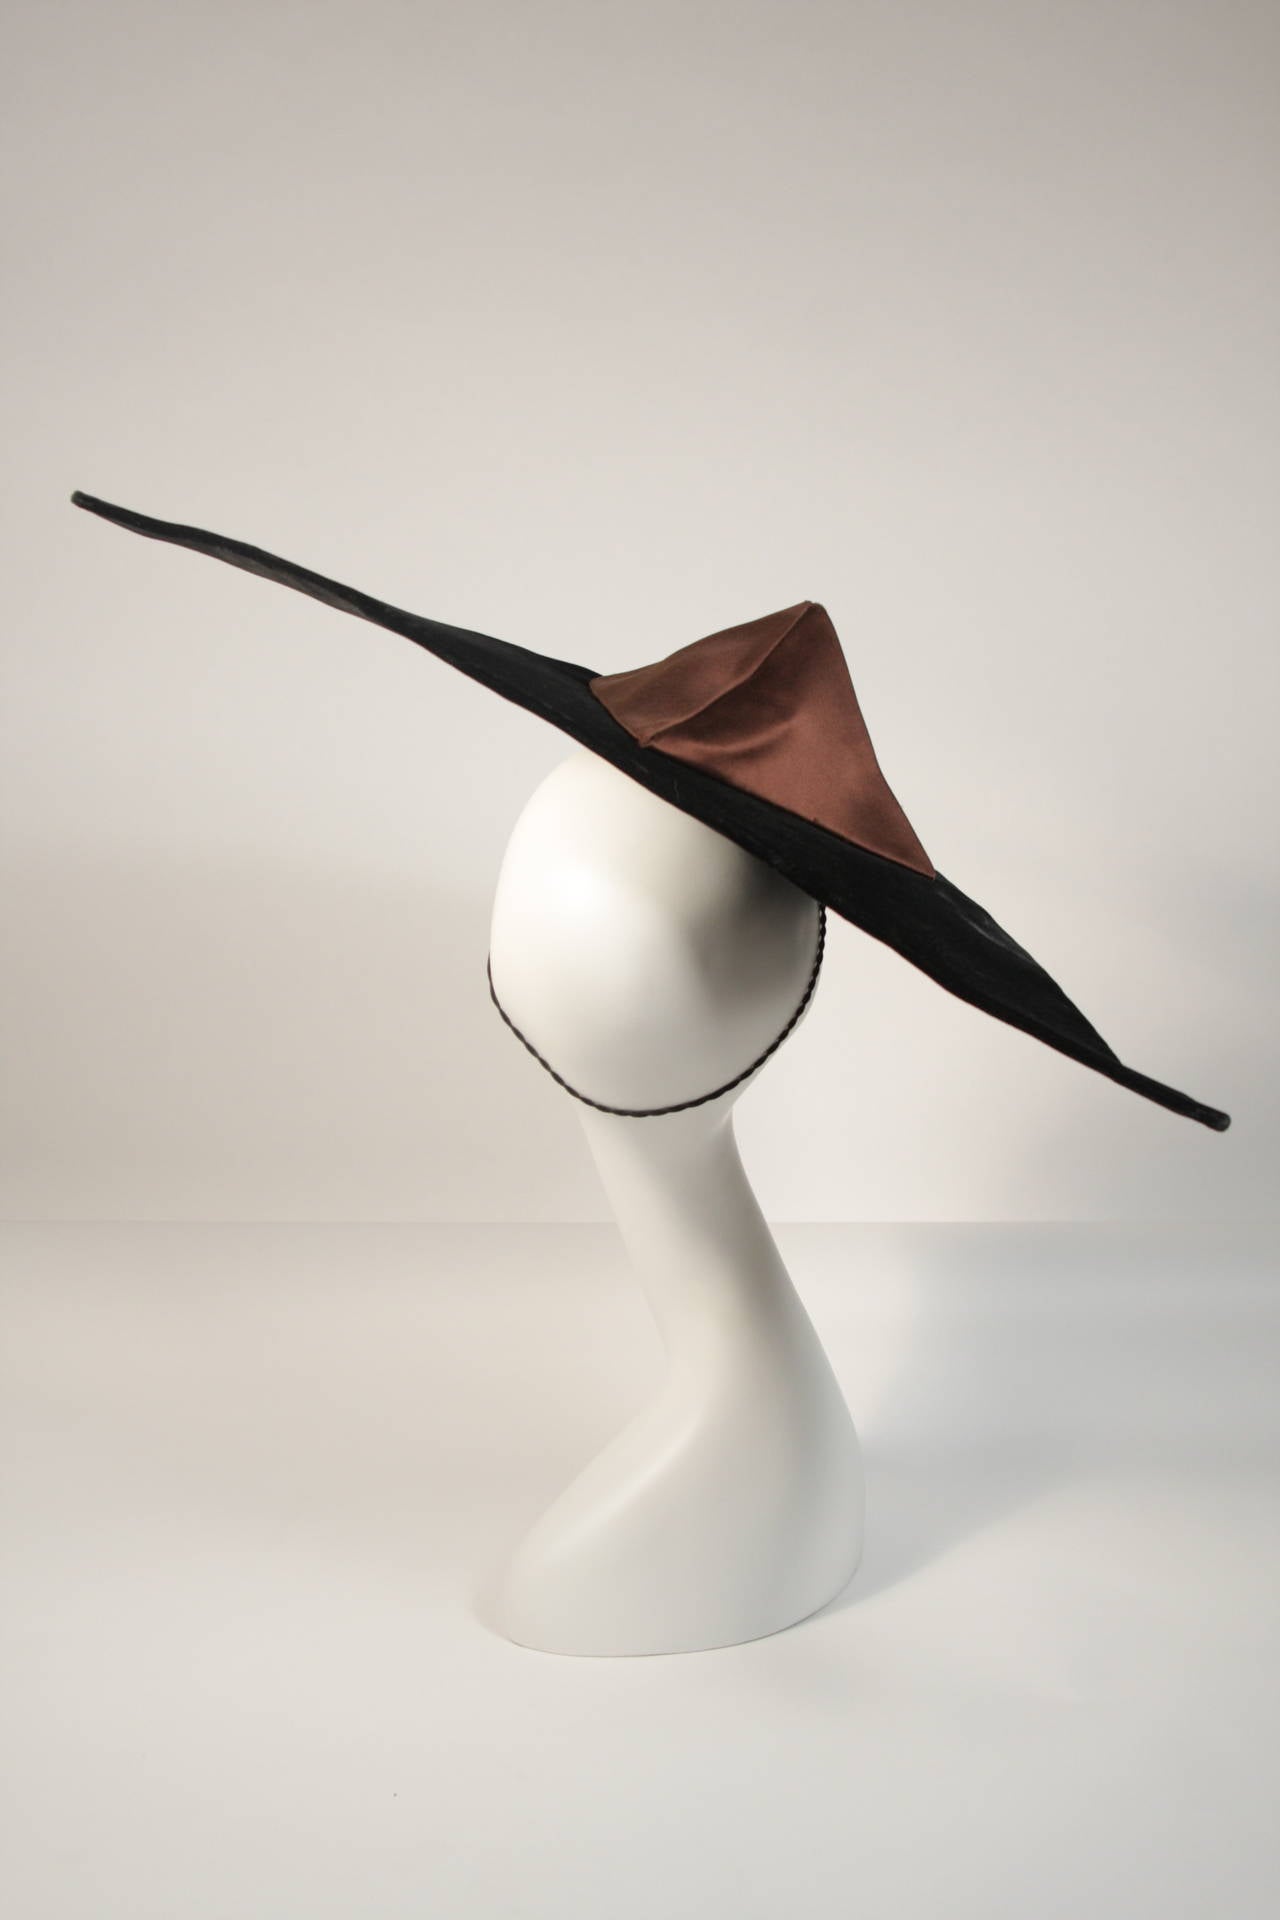 Yves Saint Laurent Rive Gauche Brown Velvet Structured Obtuse Hat 4